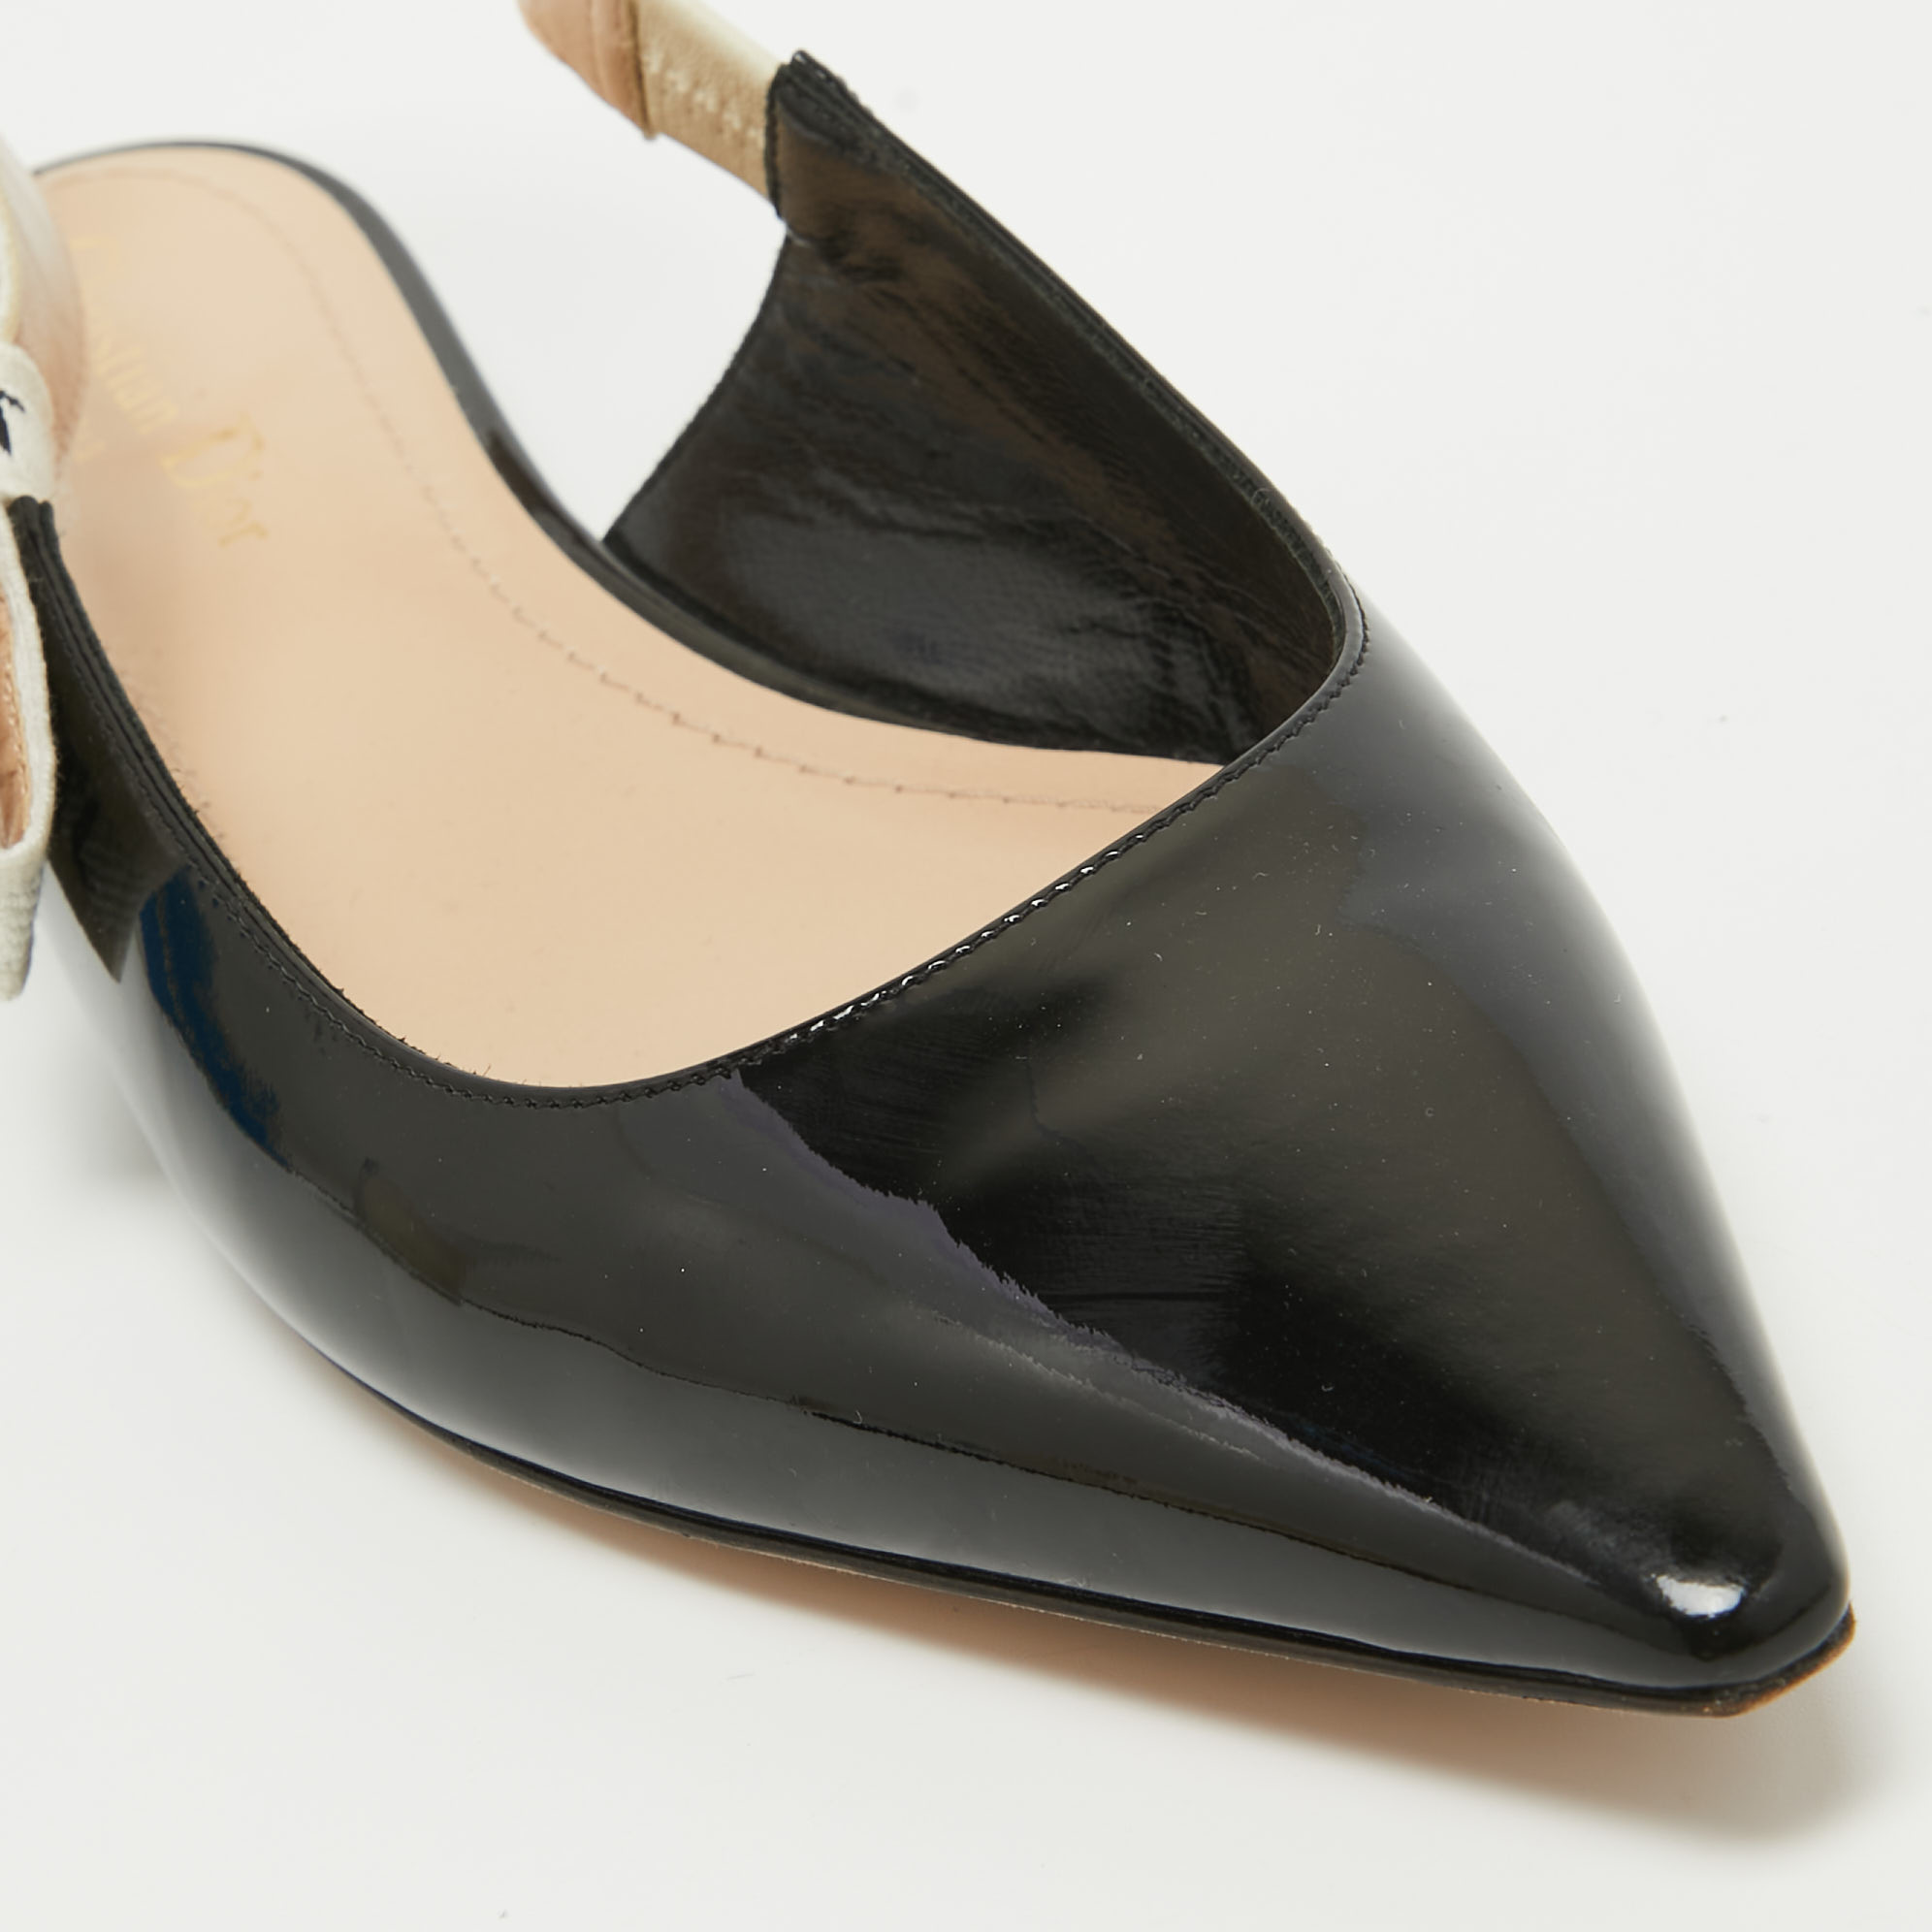 Dior Black Patent Leather J'adior Slingback Flat Sandals Size 40.5